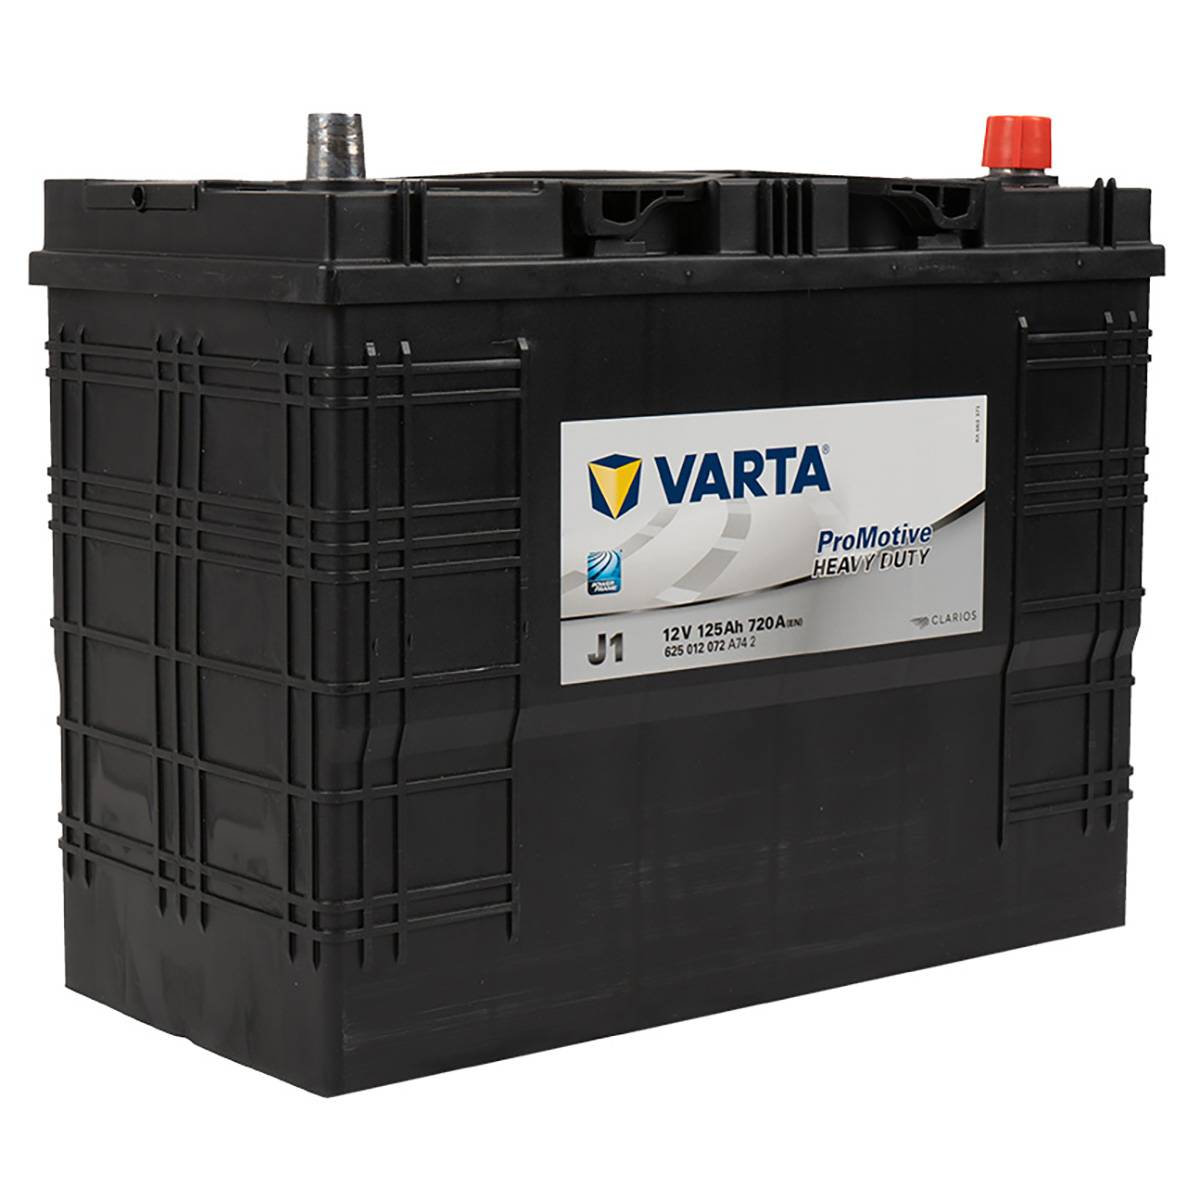 VARTA J1 ProMotive Heavy Duty 12V 125Ah 720A LKW Batterie 625 012 072